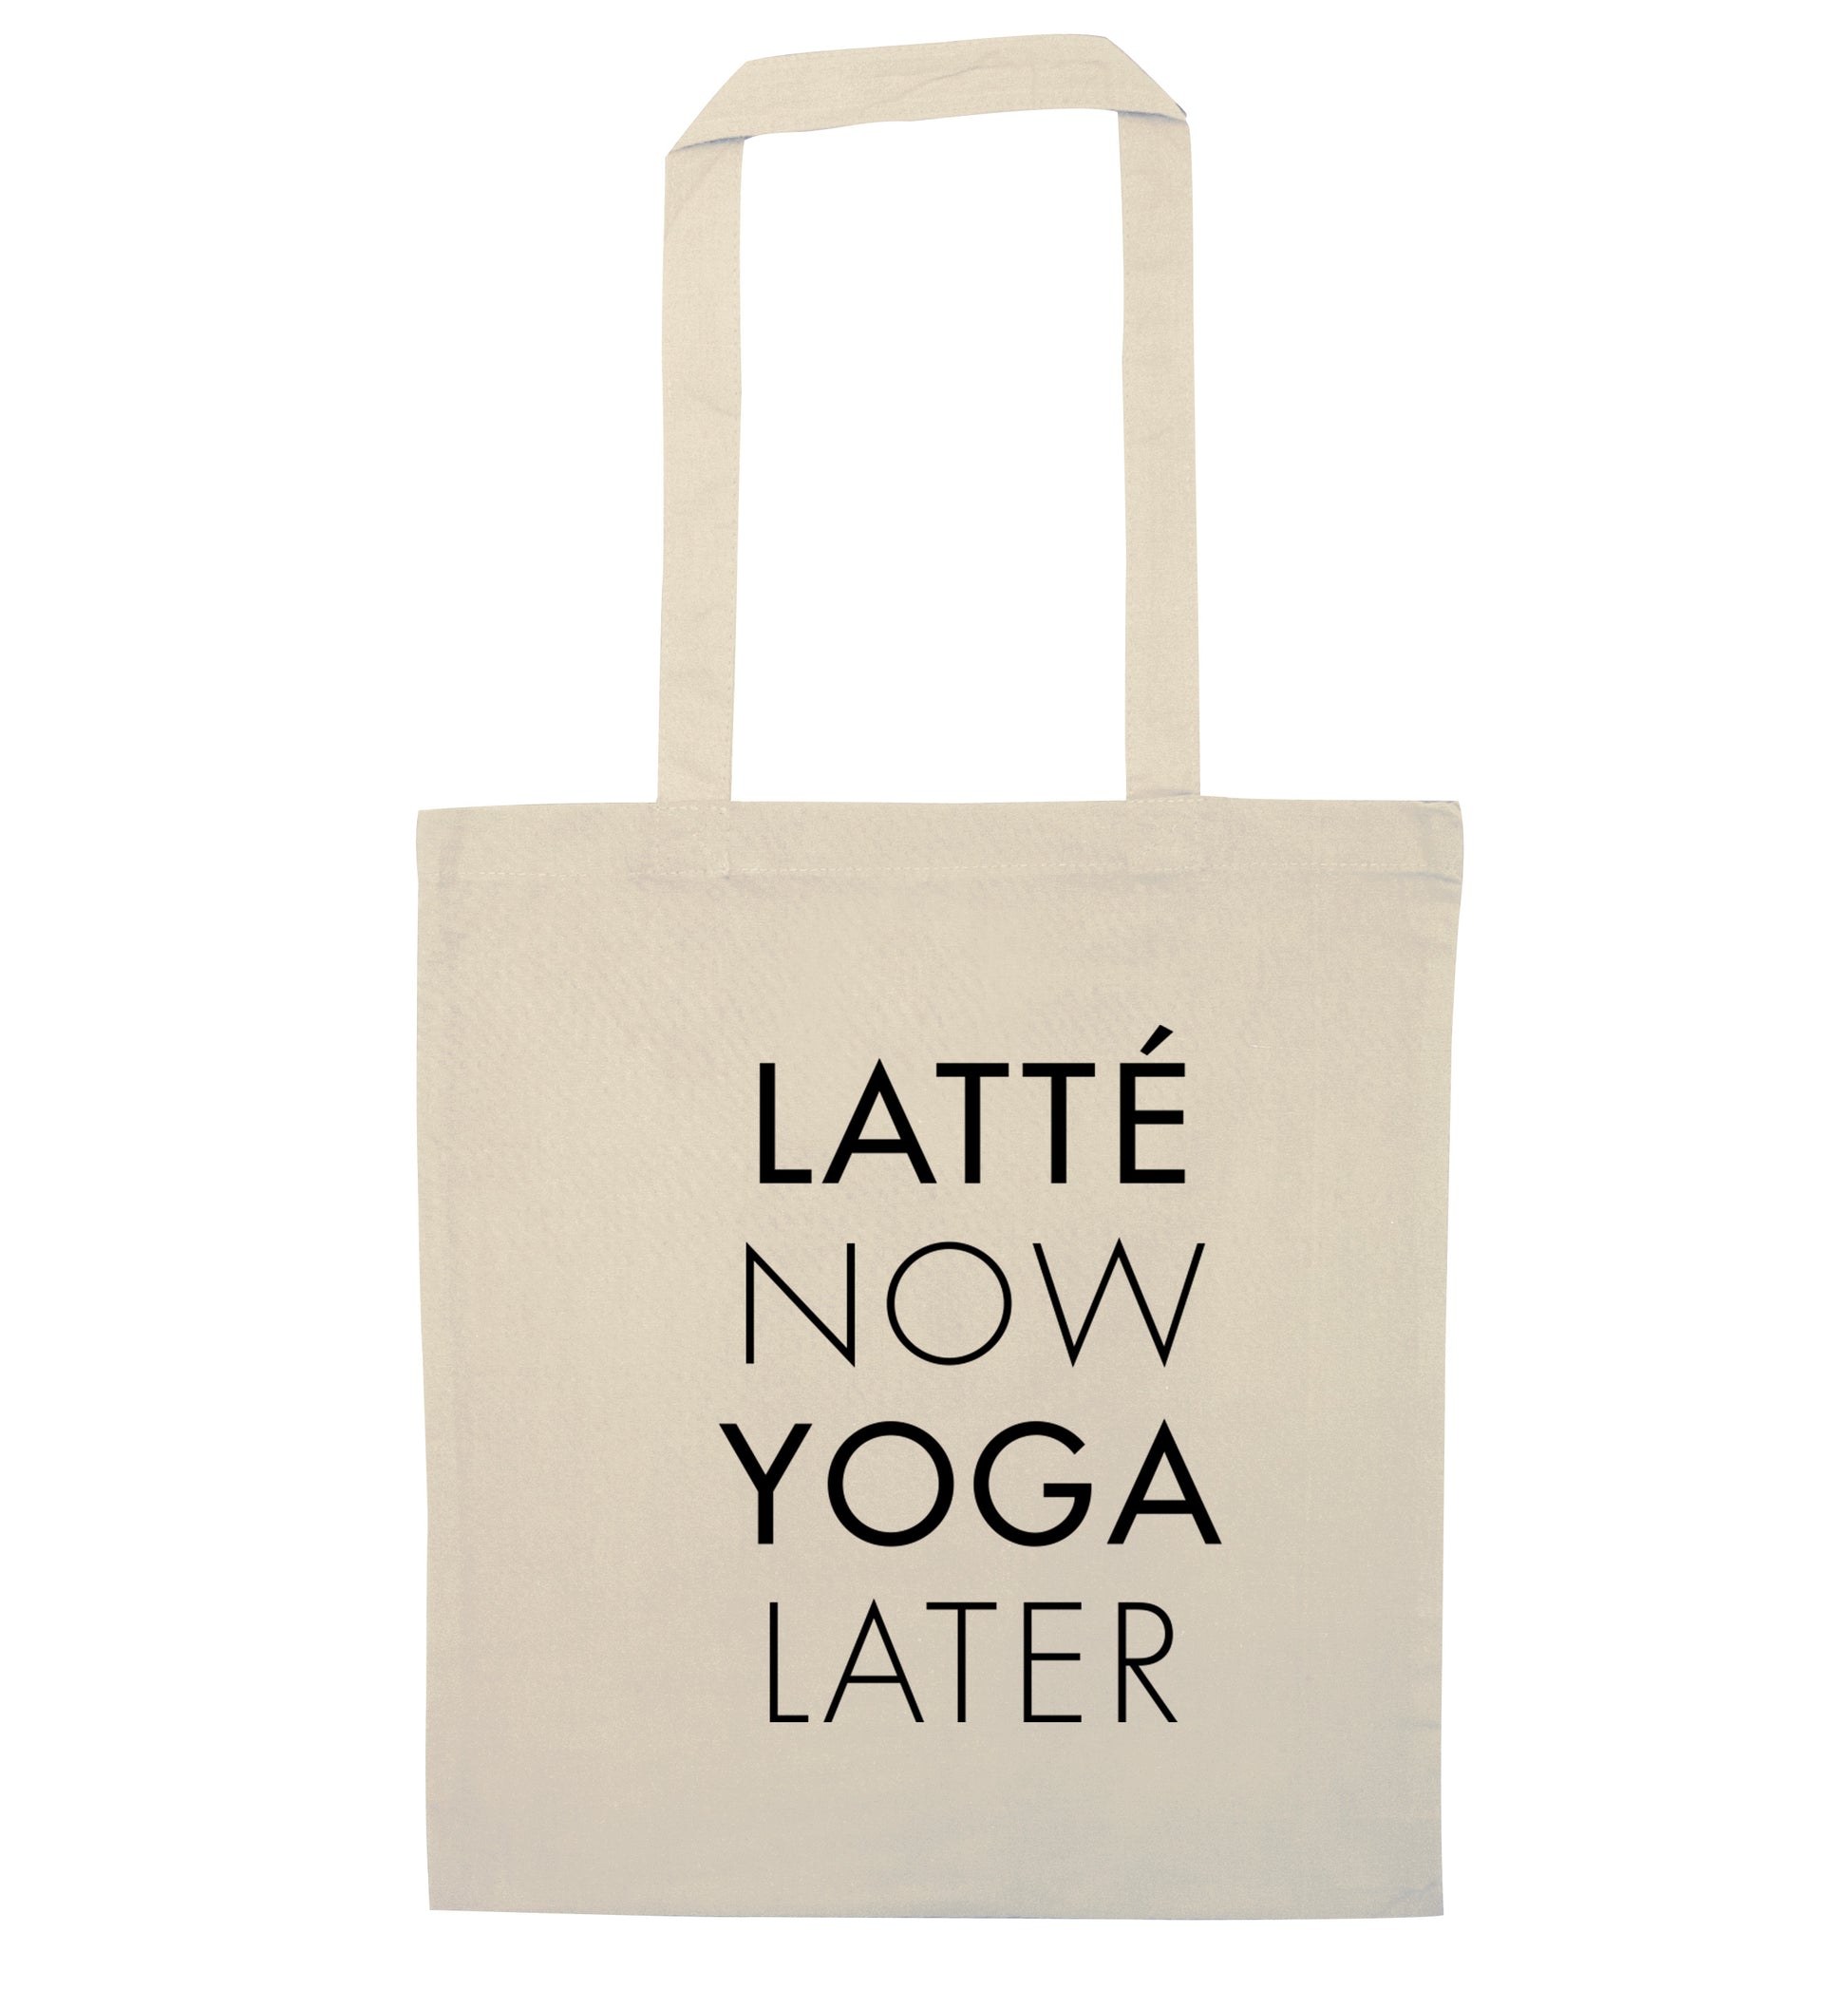 Latte now yoga later natural tote bag